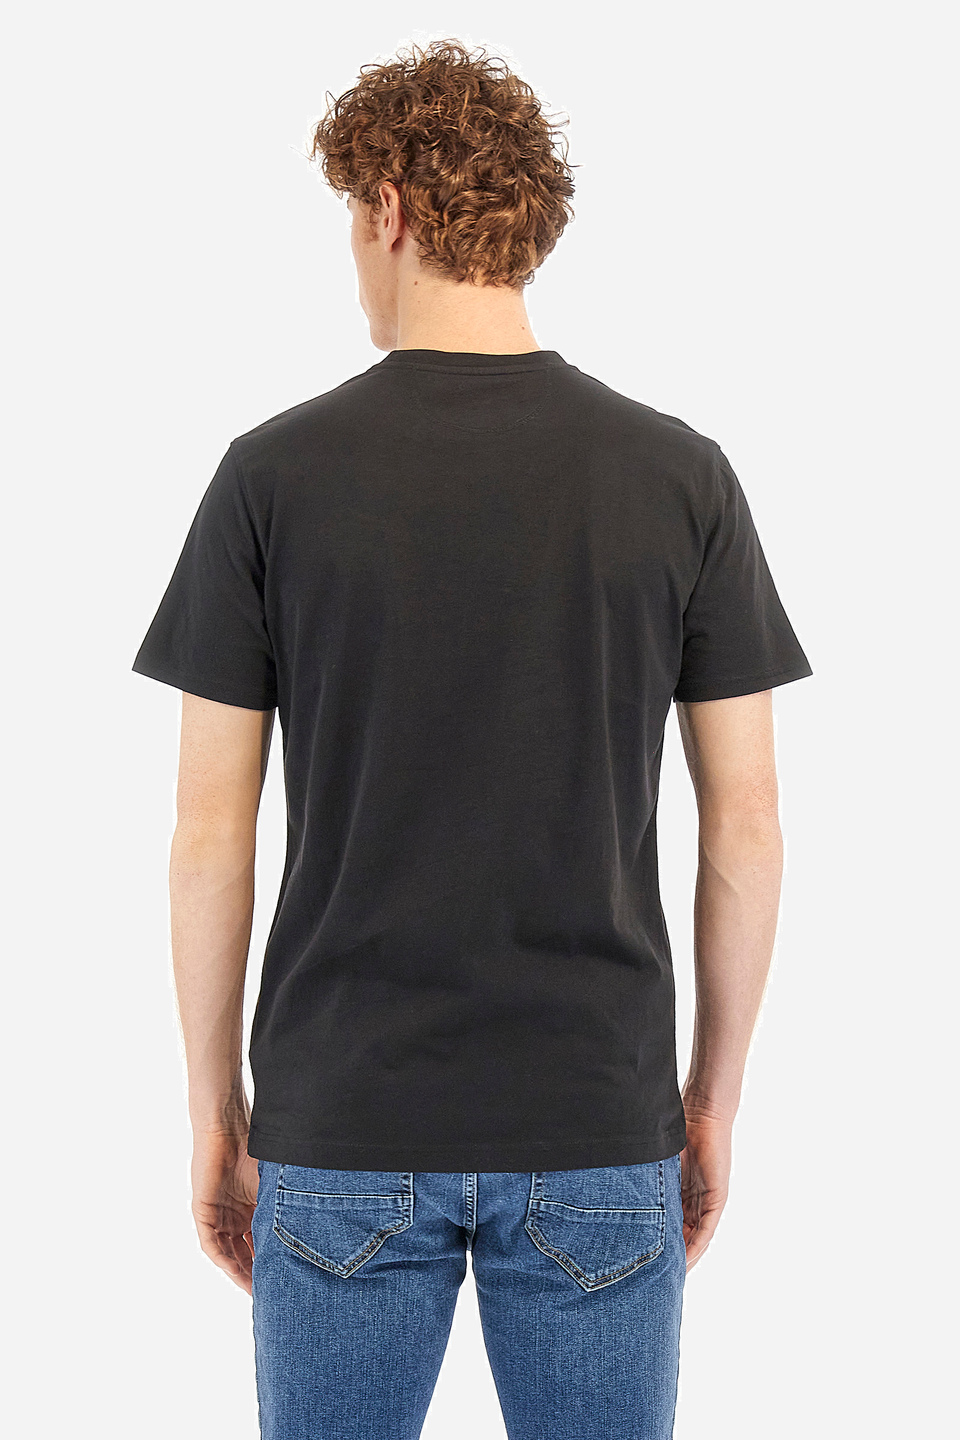 Men's T-shirts in a regular fit - Wandie | La Martina - Official Online Shop